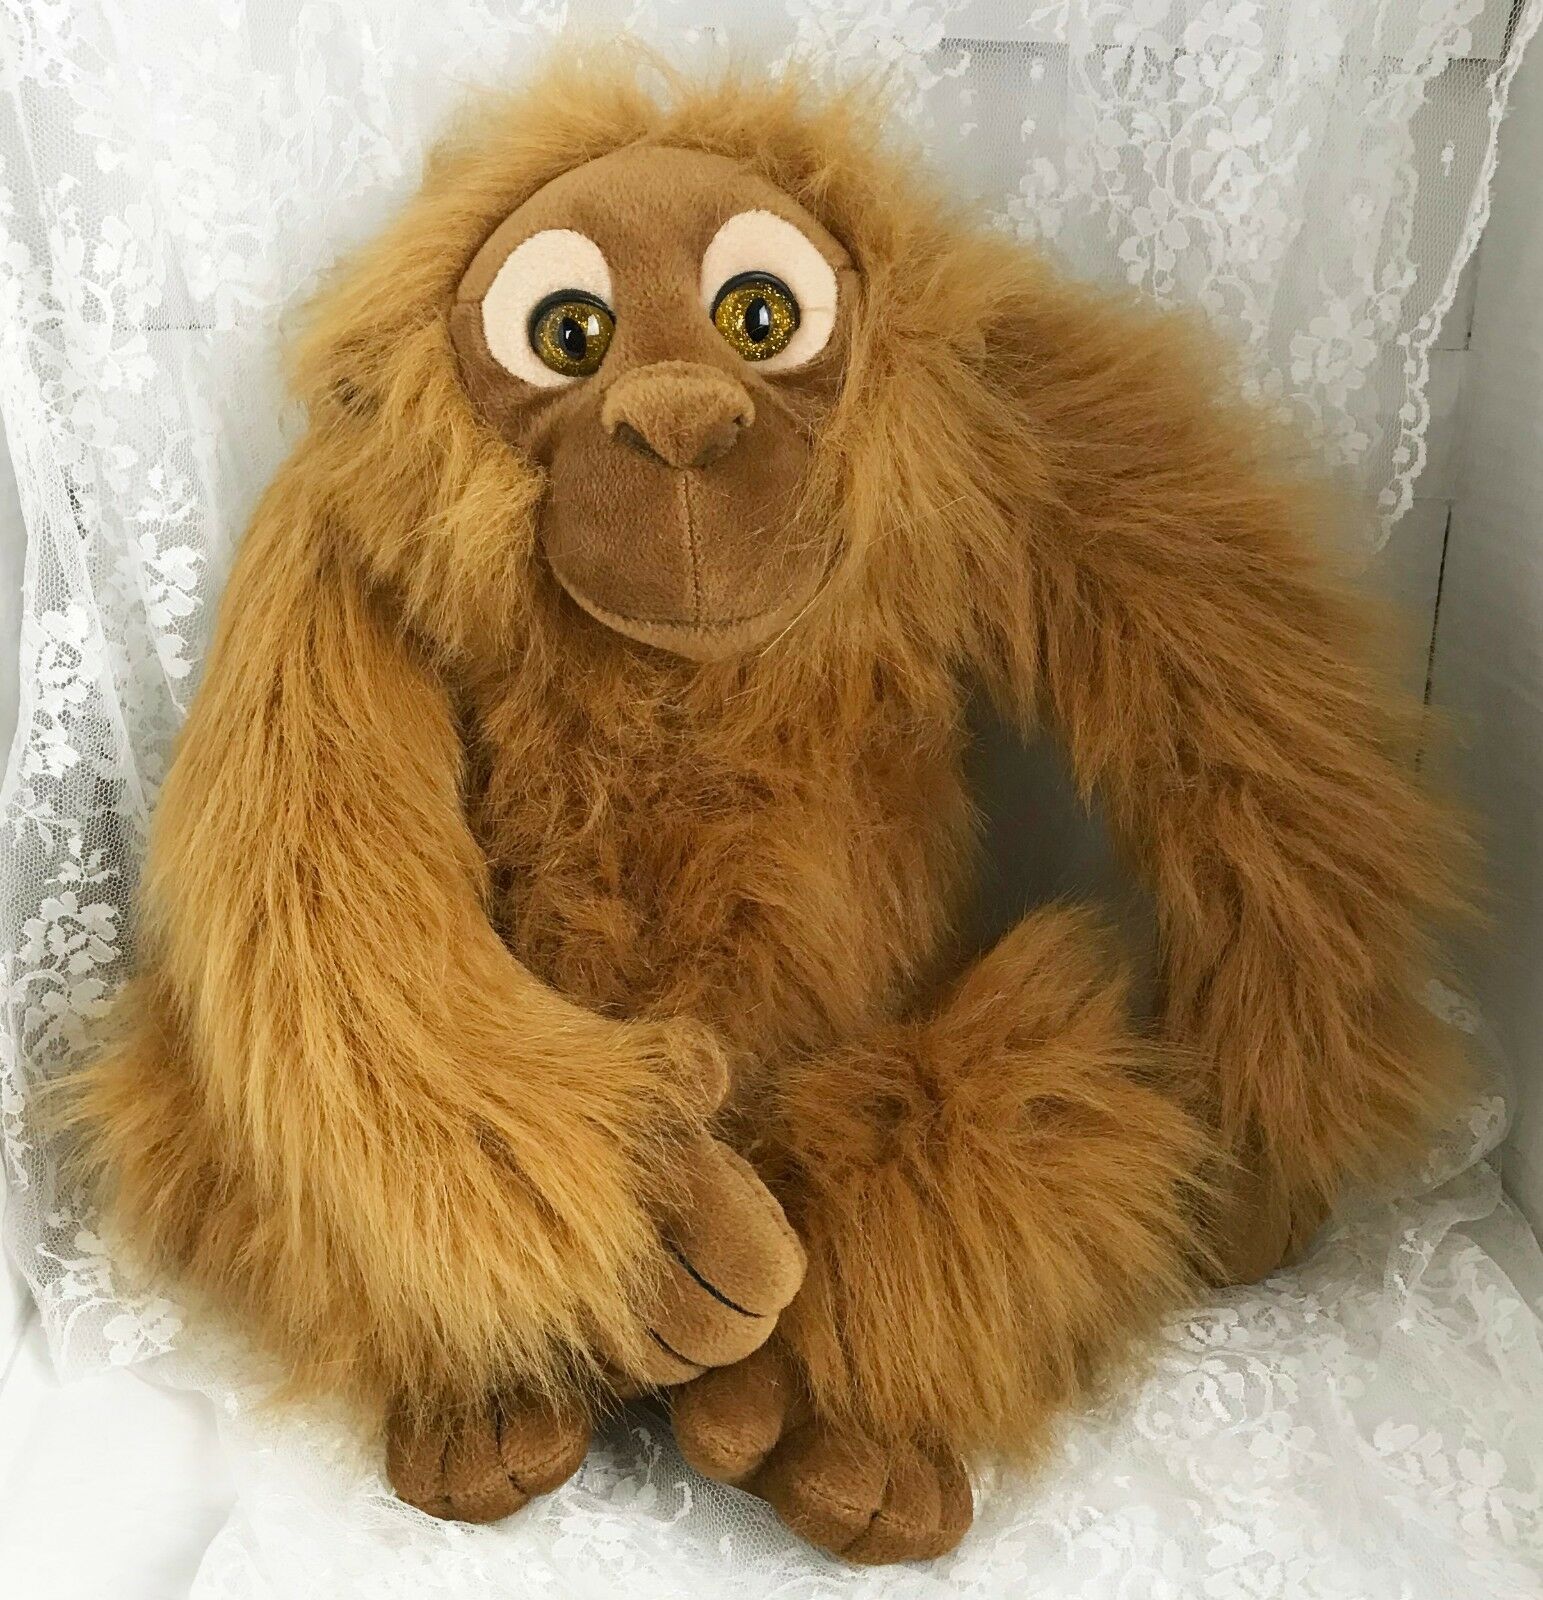 Beverly Hills Teddy Bear Company Plush Orangutan Ape Monkey 13" Sitting No Sound - $41.24